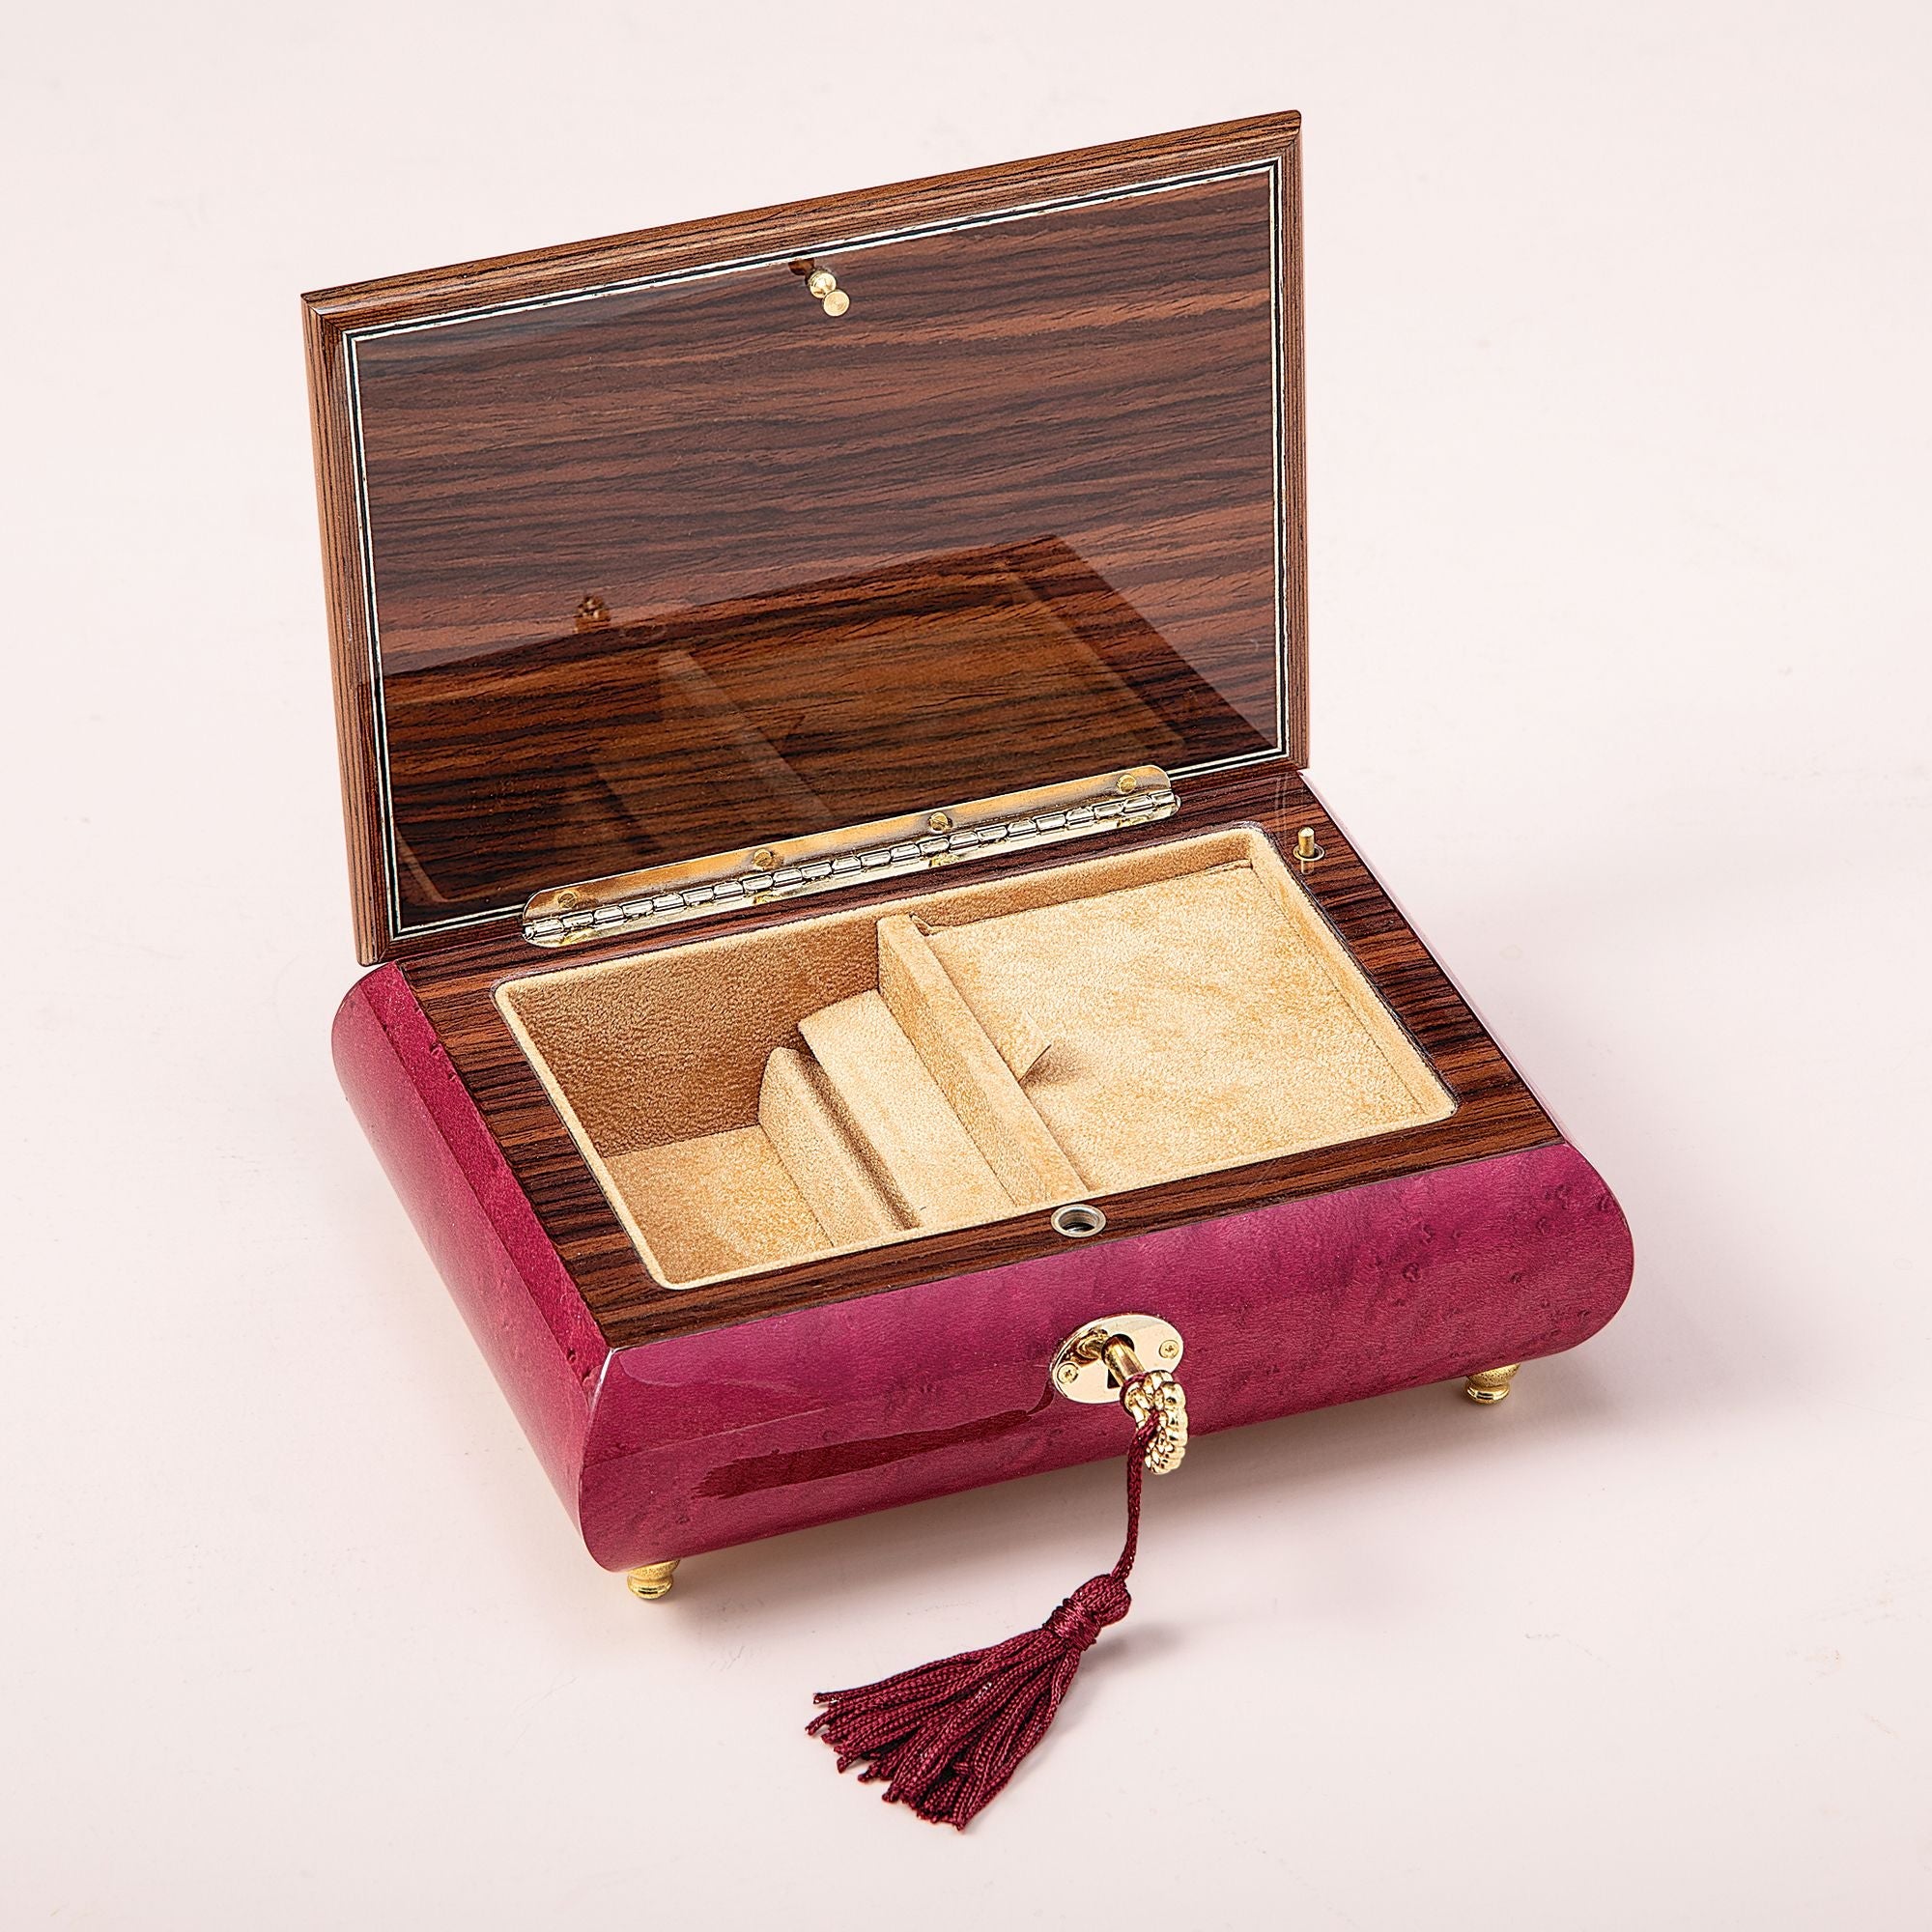 Wooden Intarsia Heart Jewelry Box